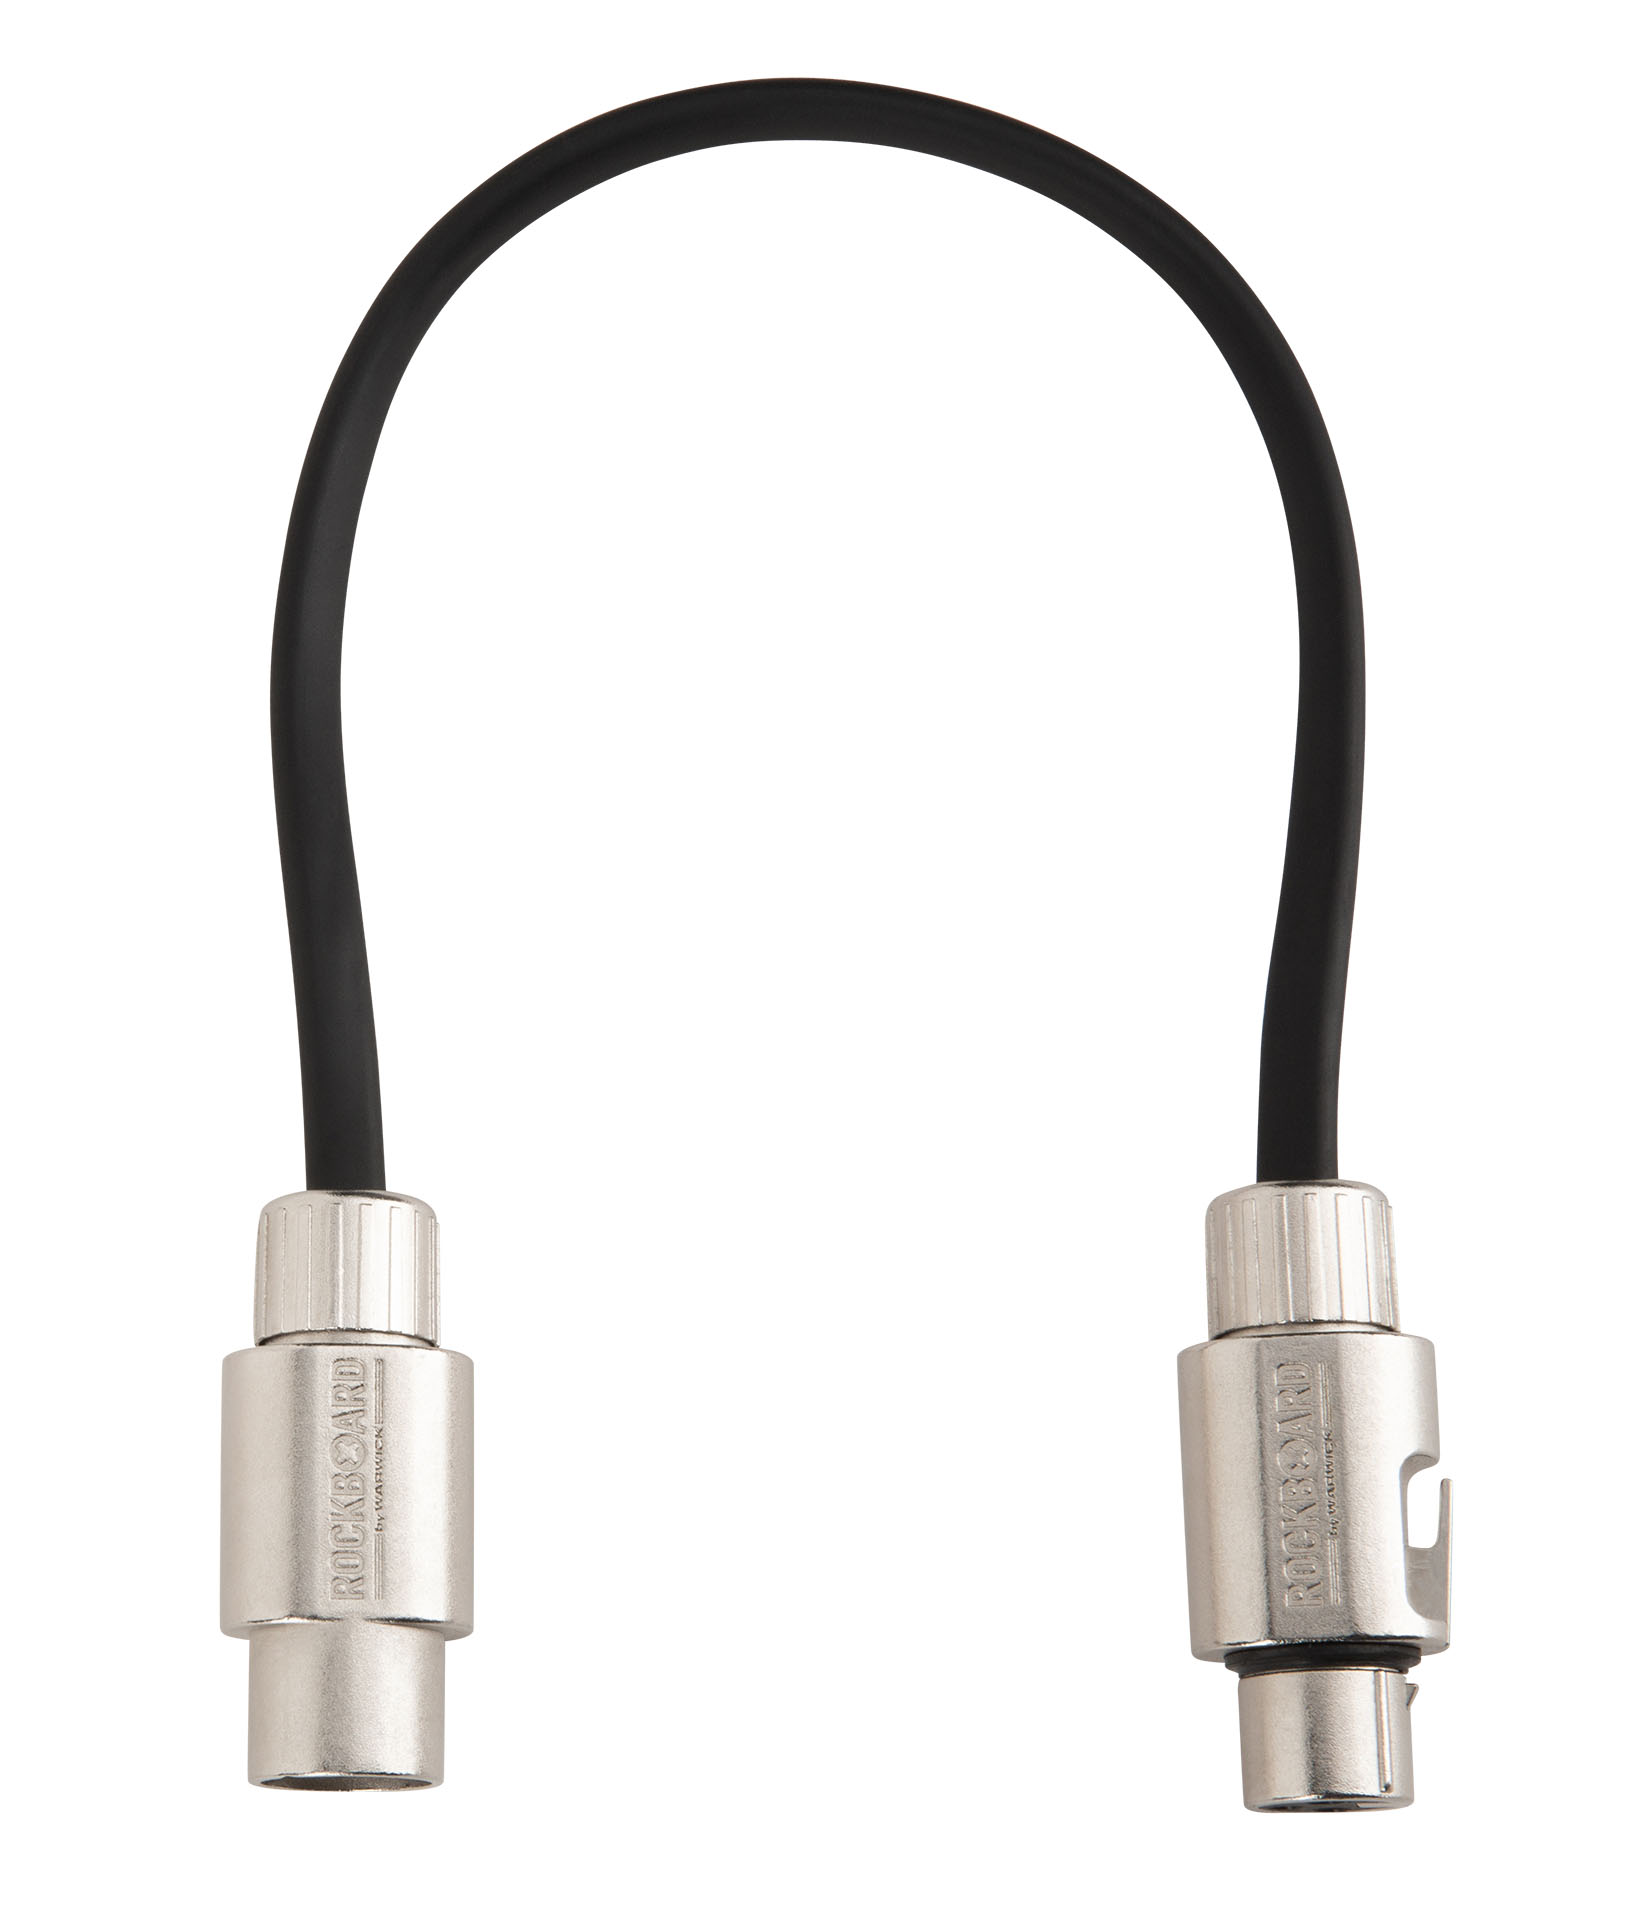 RockBoard Flat XLR Cable - 30 cm / 11 13/16"